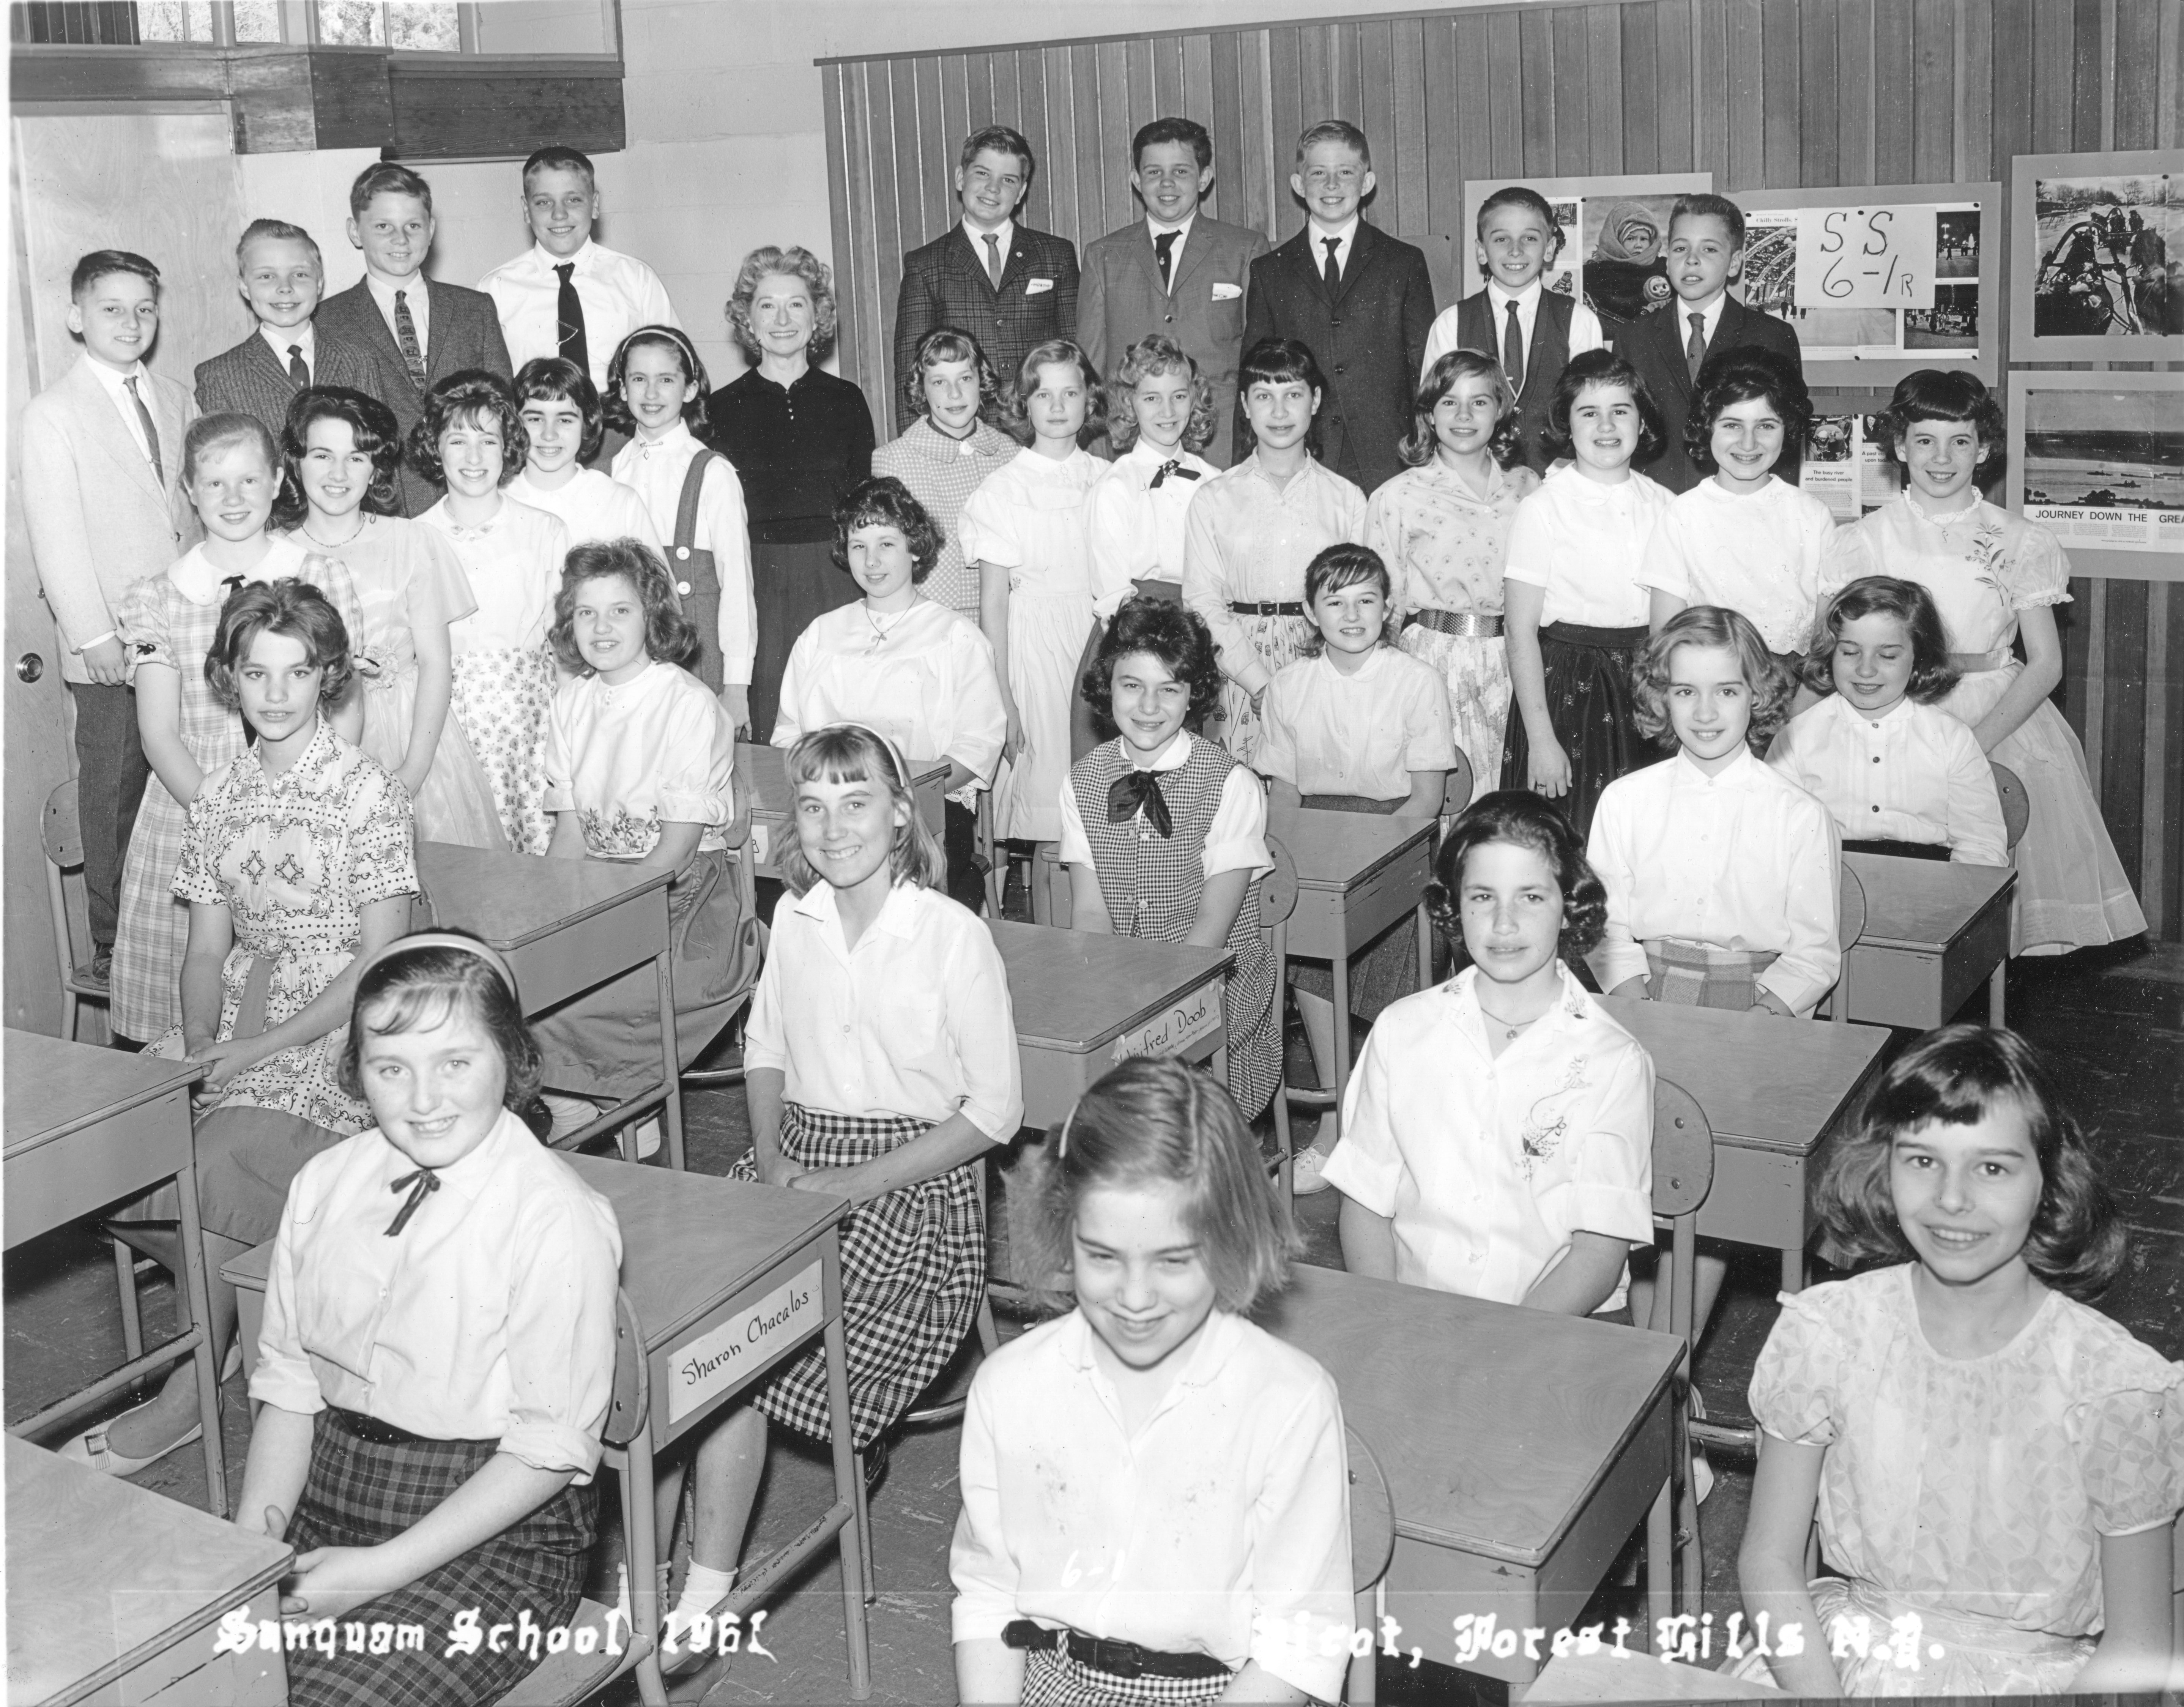 Black and white photo of Sunquam School 6th grade class with teacher Mrs. McDonald